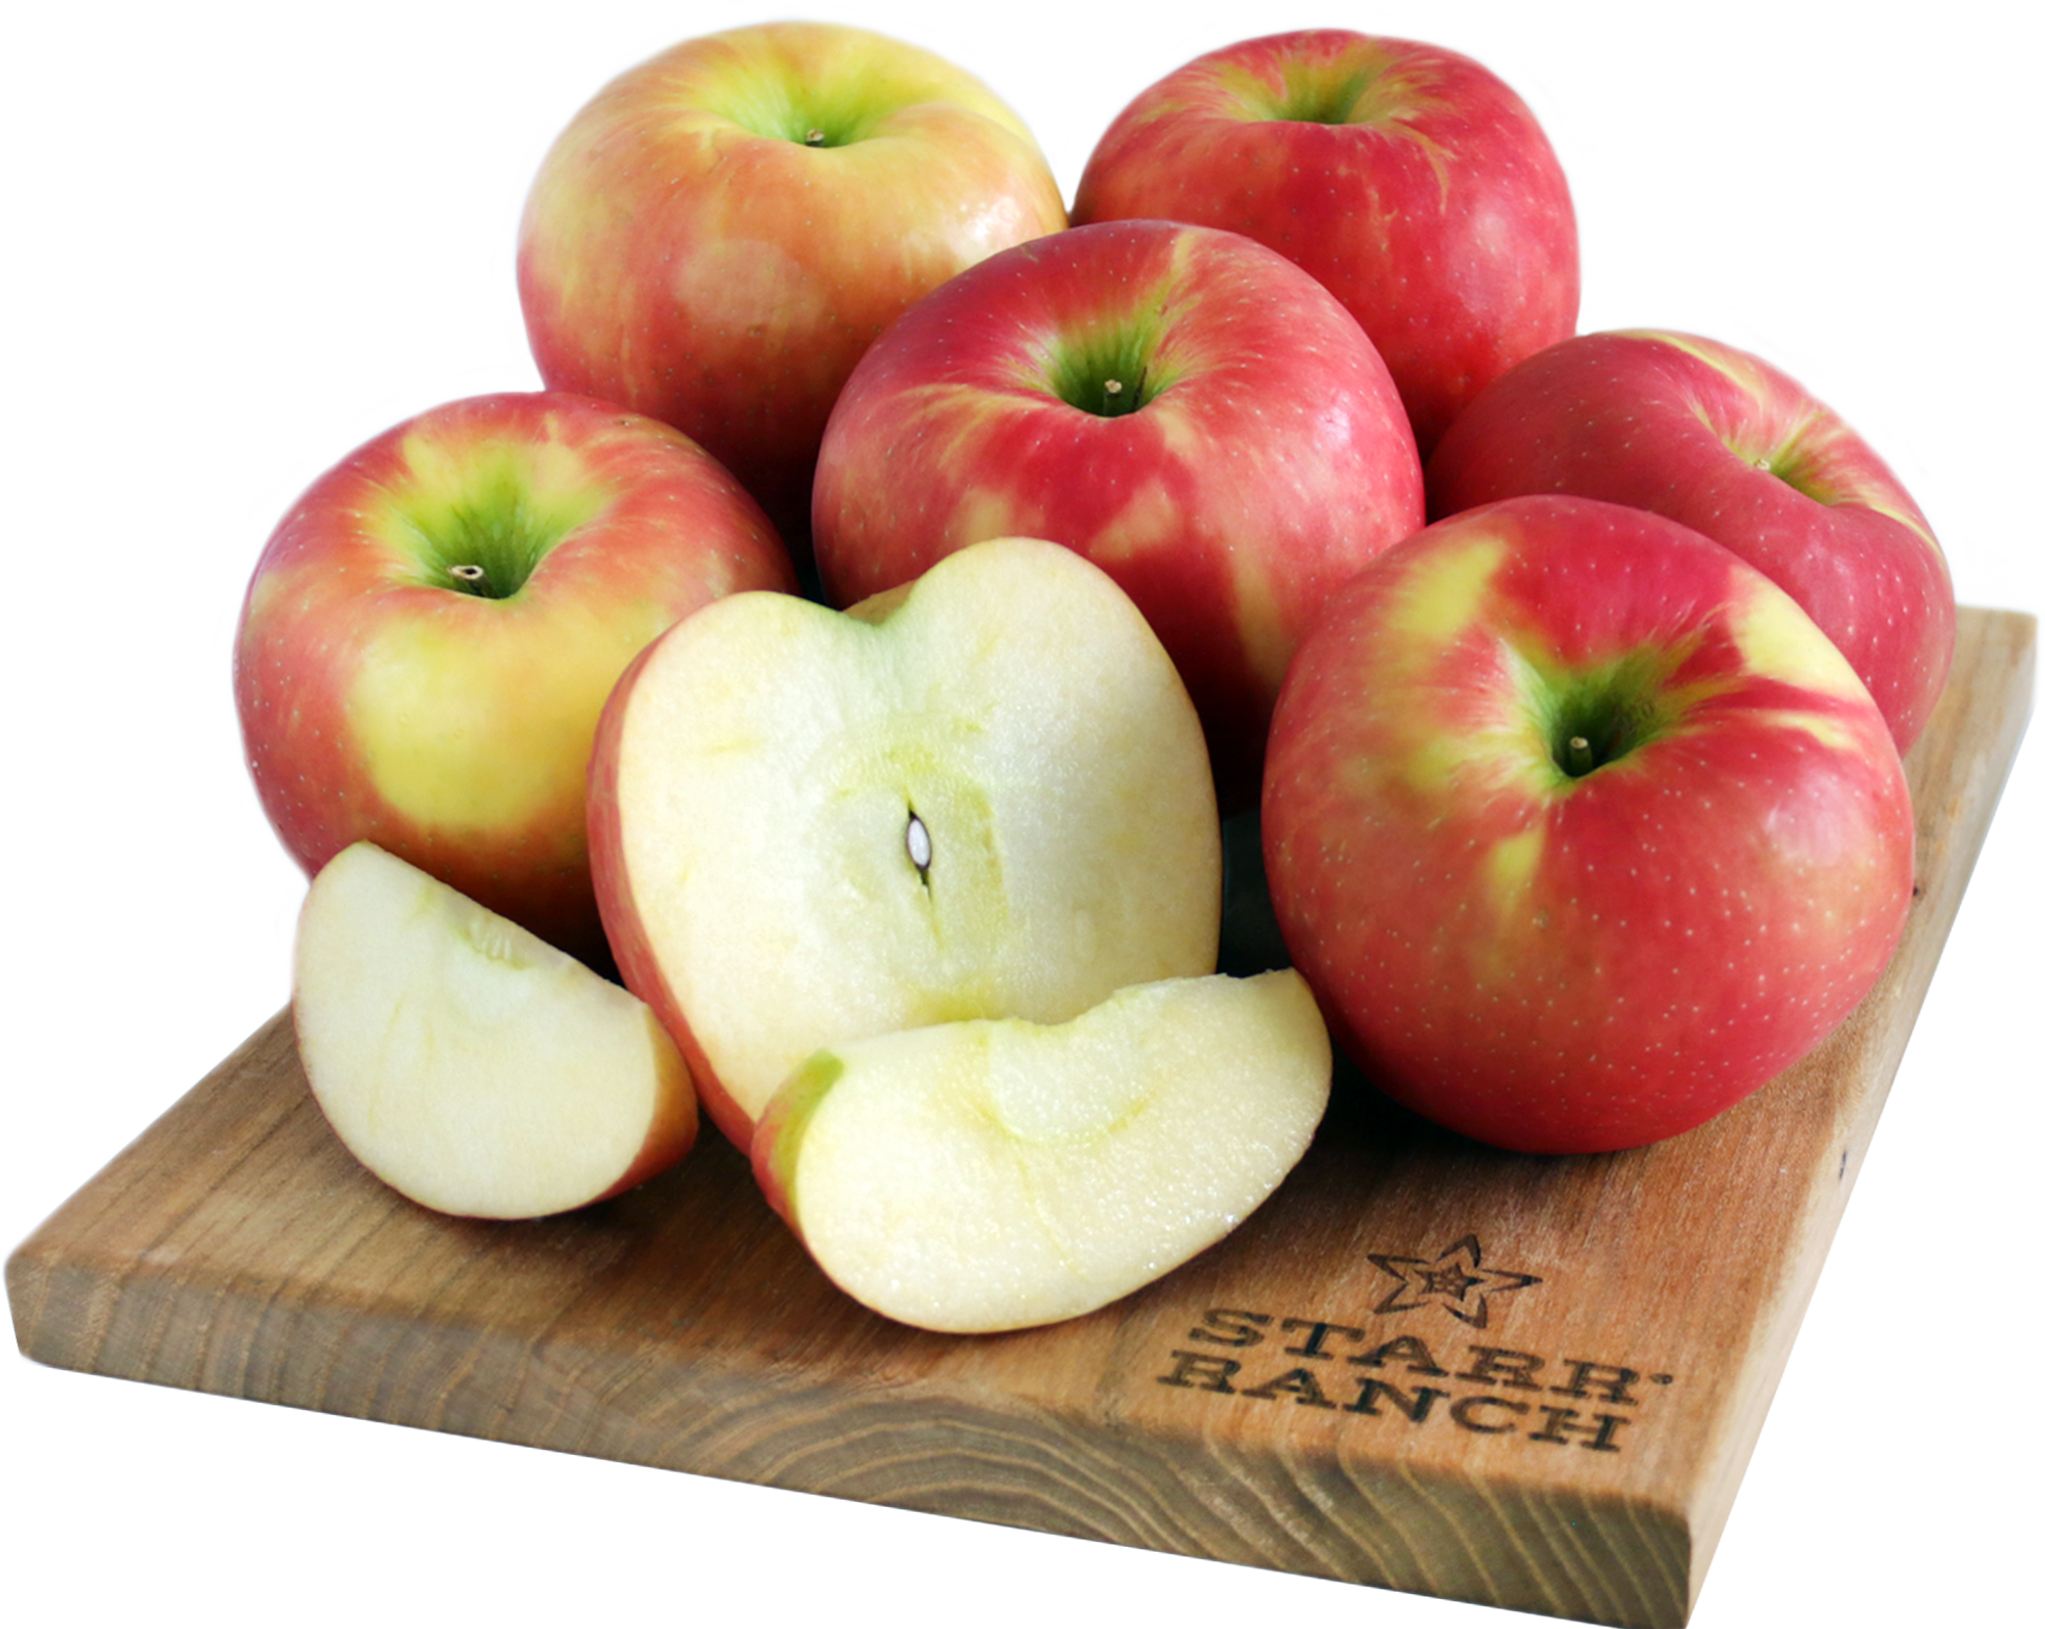 1 box (12)- Honeycrisp Apples